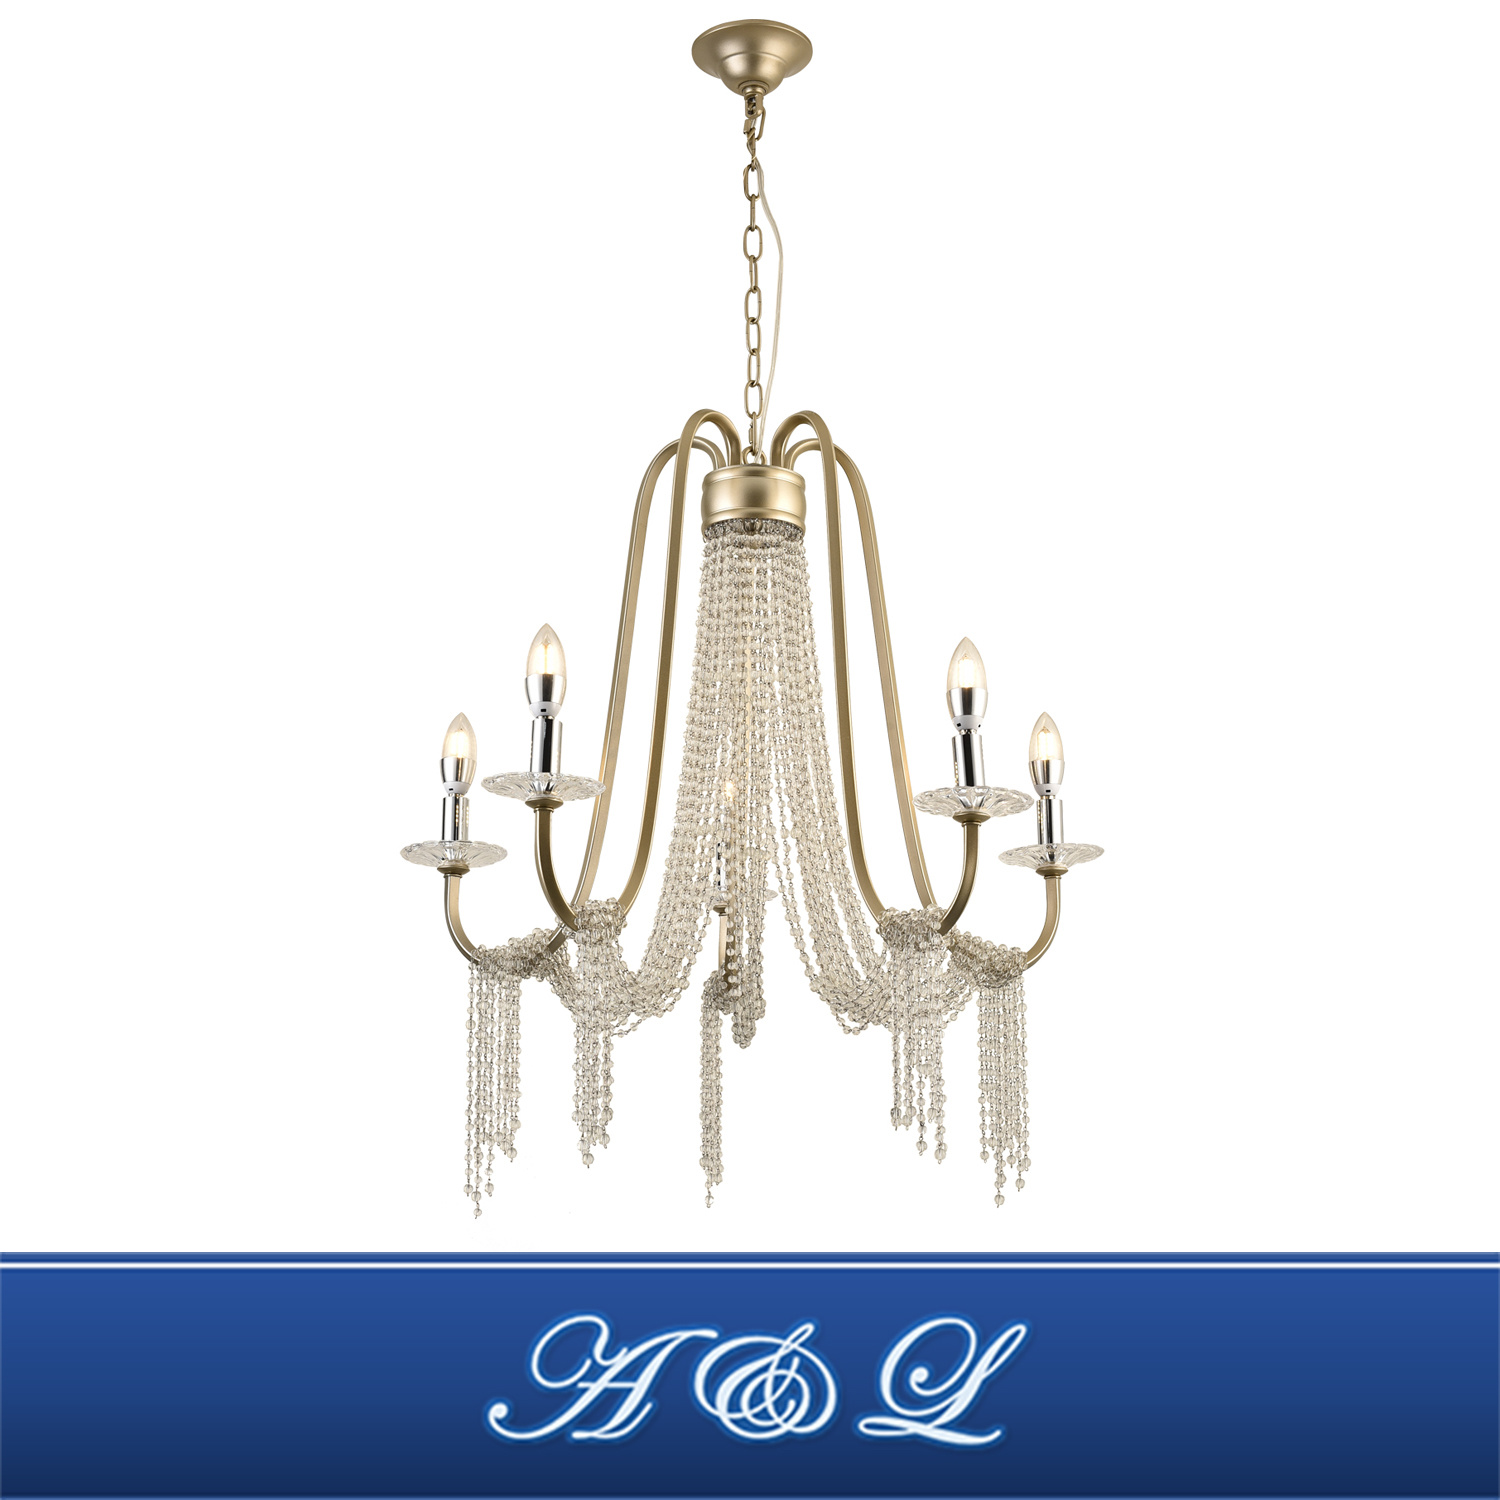 Classical Design 5-Light Decorative Crystal Chandelier Lamp for Hallway, Bedroom, Living Room, Kitchen, Dining Room (Chrome)